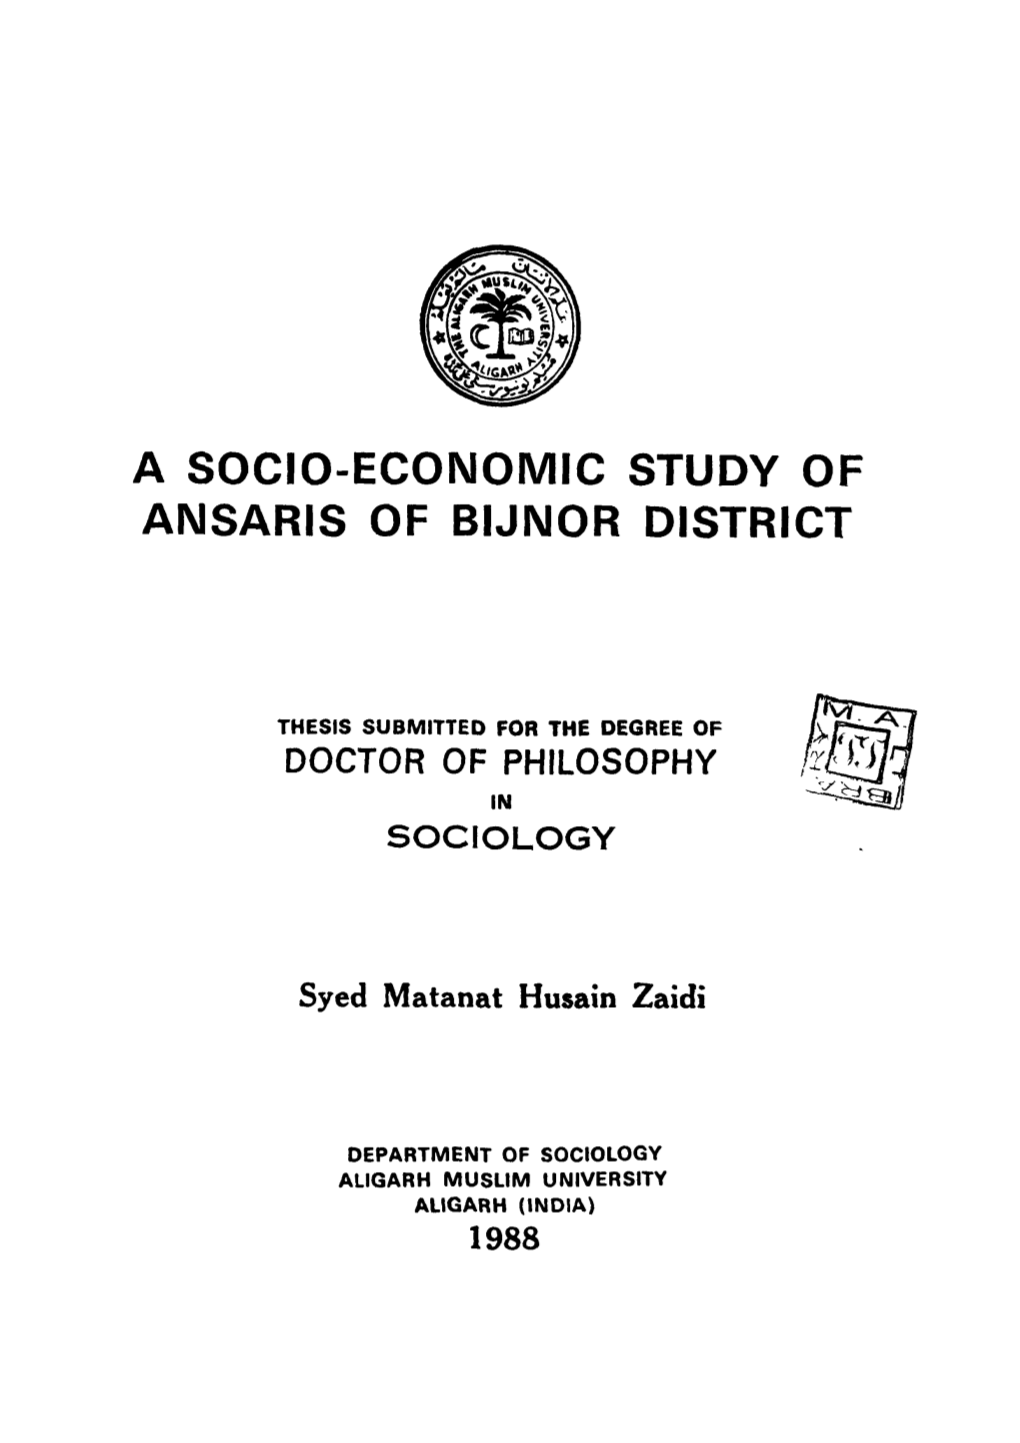 A Socio-Economic Study of Ansaris of Bijnor District